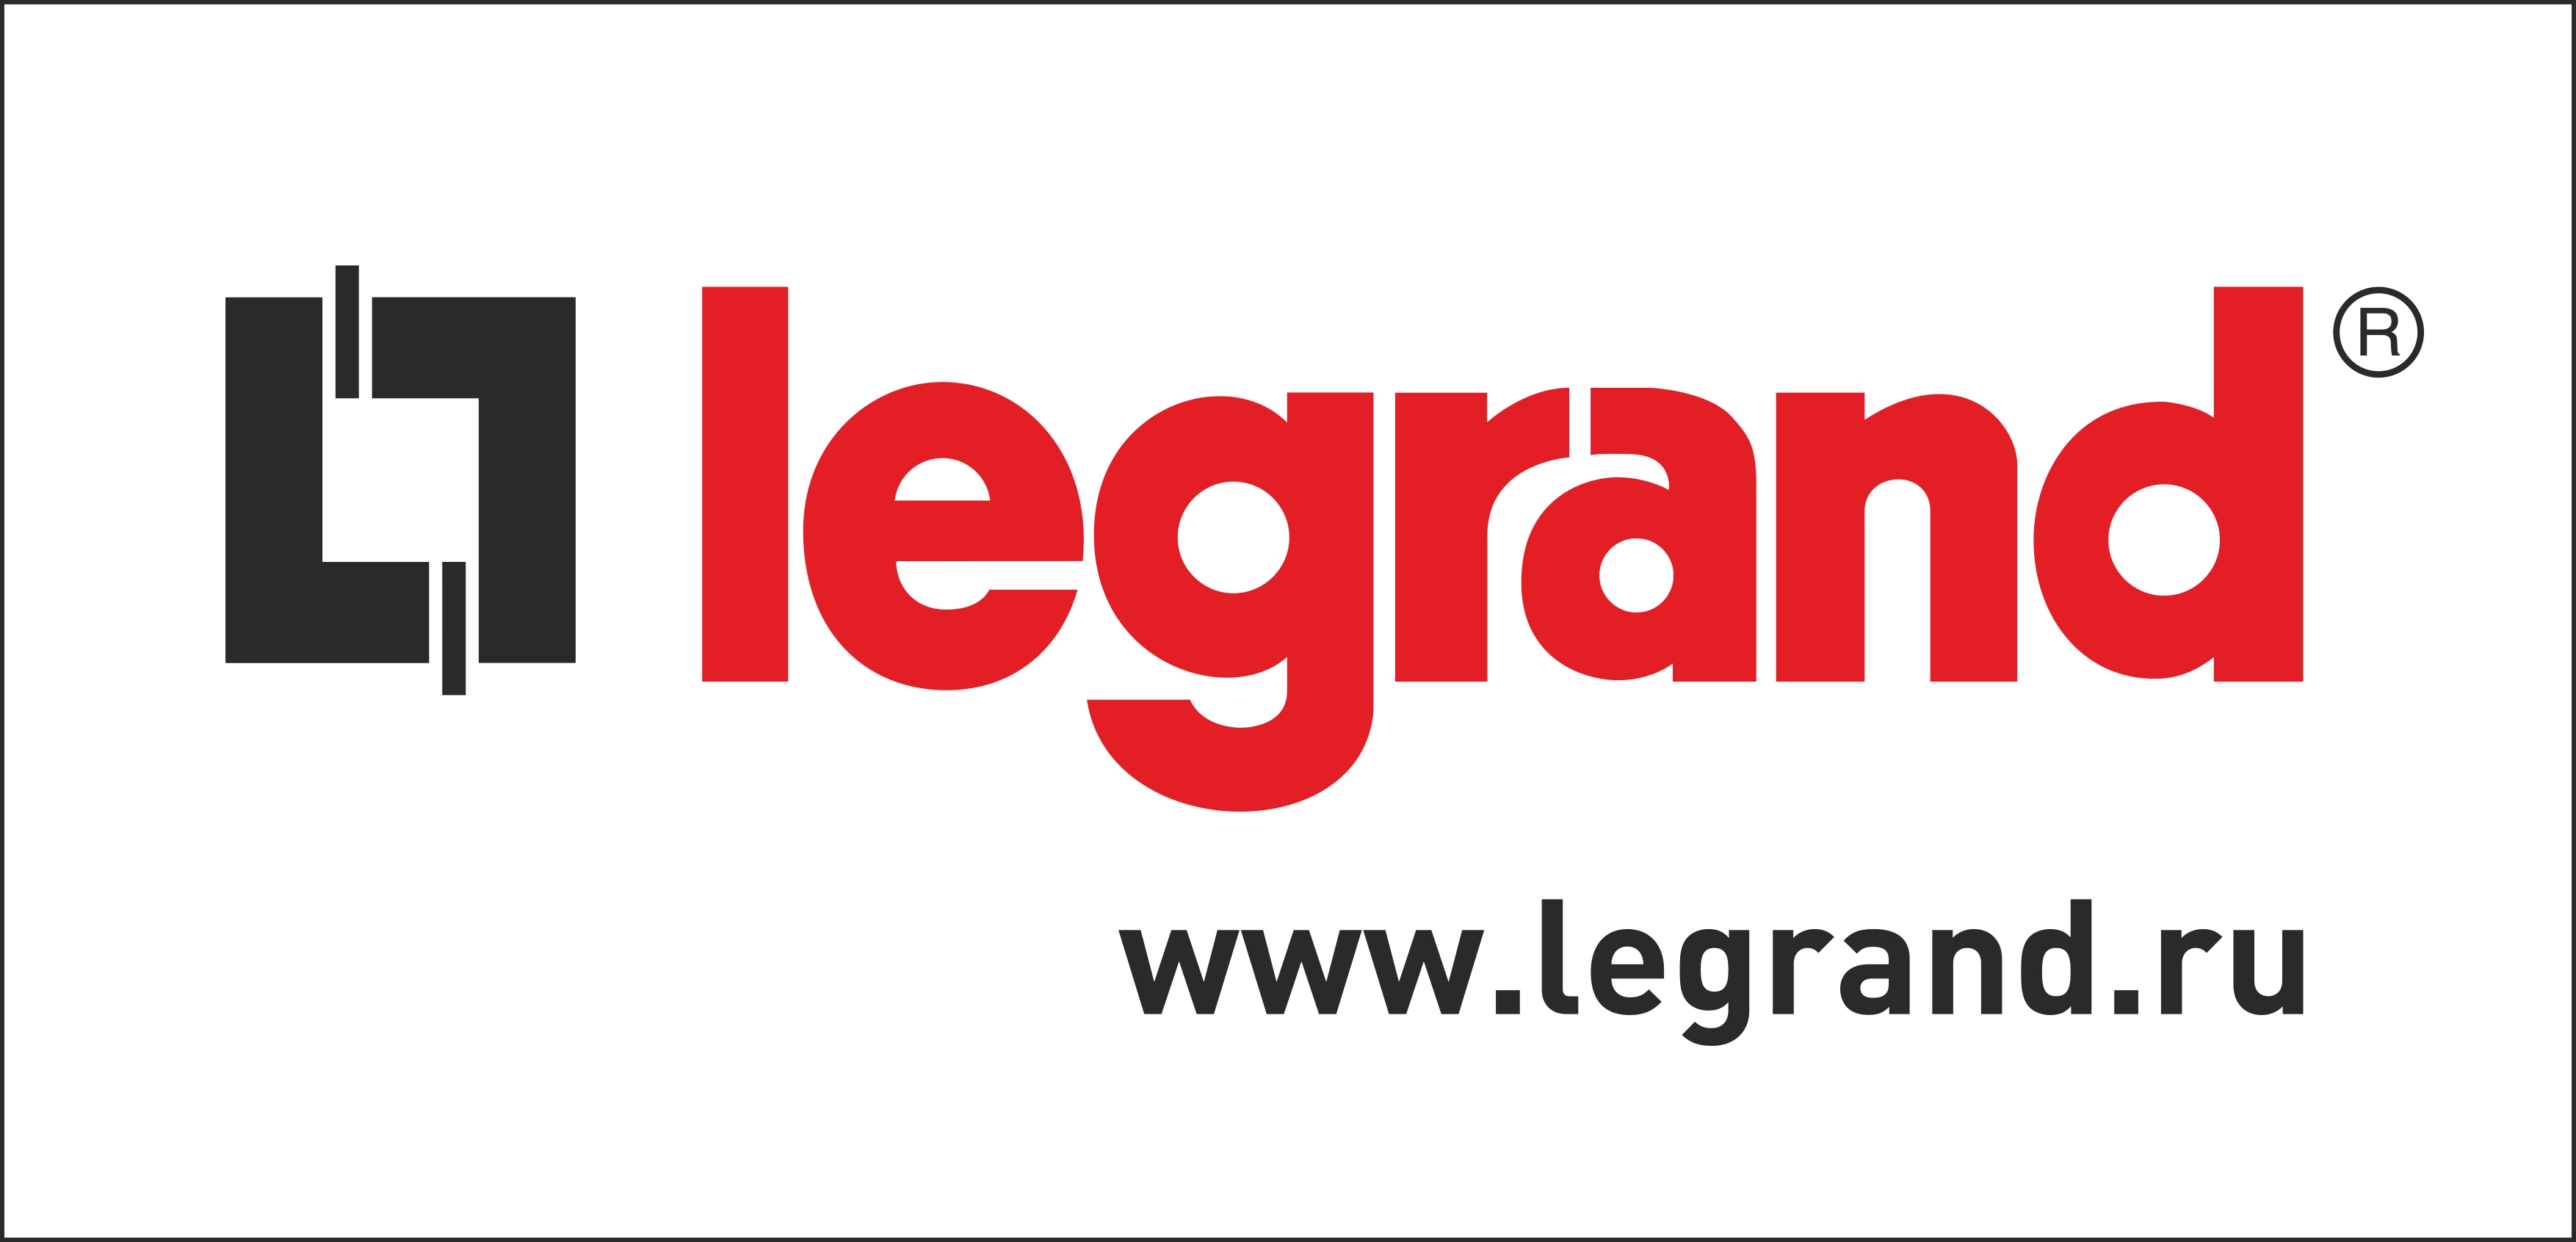 Legrand_logo_site.jpg